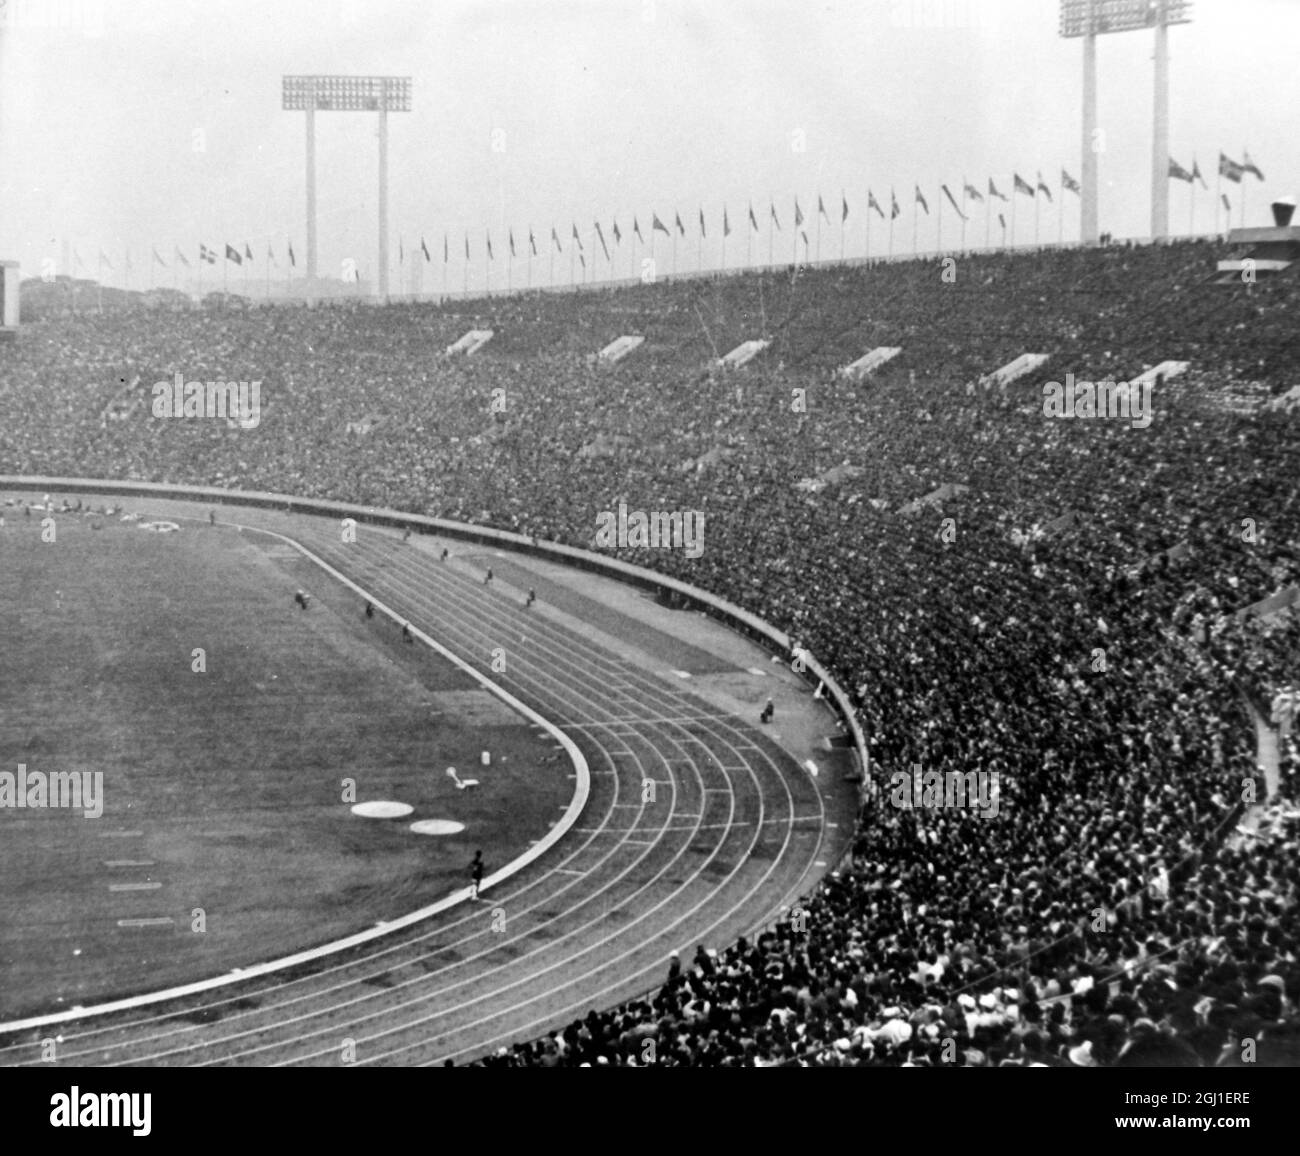 OLYMPICS, OLYMPIC SPORT GAMES - THE XVIII 18TH OLYMPIAD IN TOKYO, JAPAN - BIKILA ABEBE OF ETHIOPIA WINS MARATHON RUN RACE ; 23 OCTOBER 1964 Stock Photo